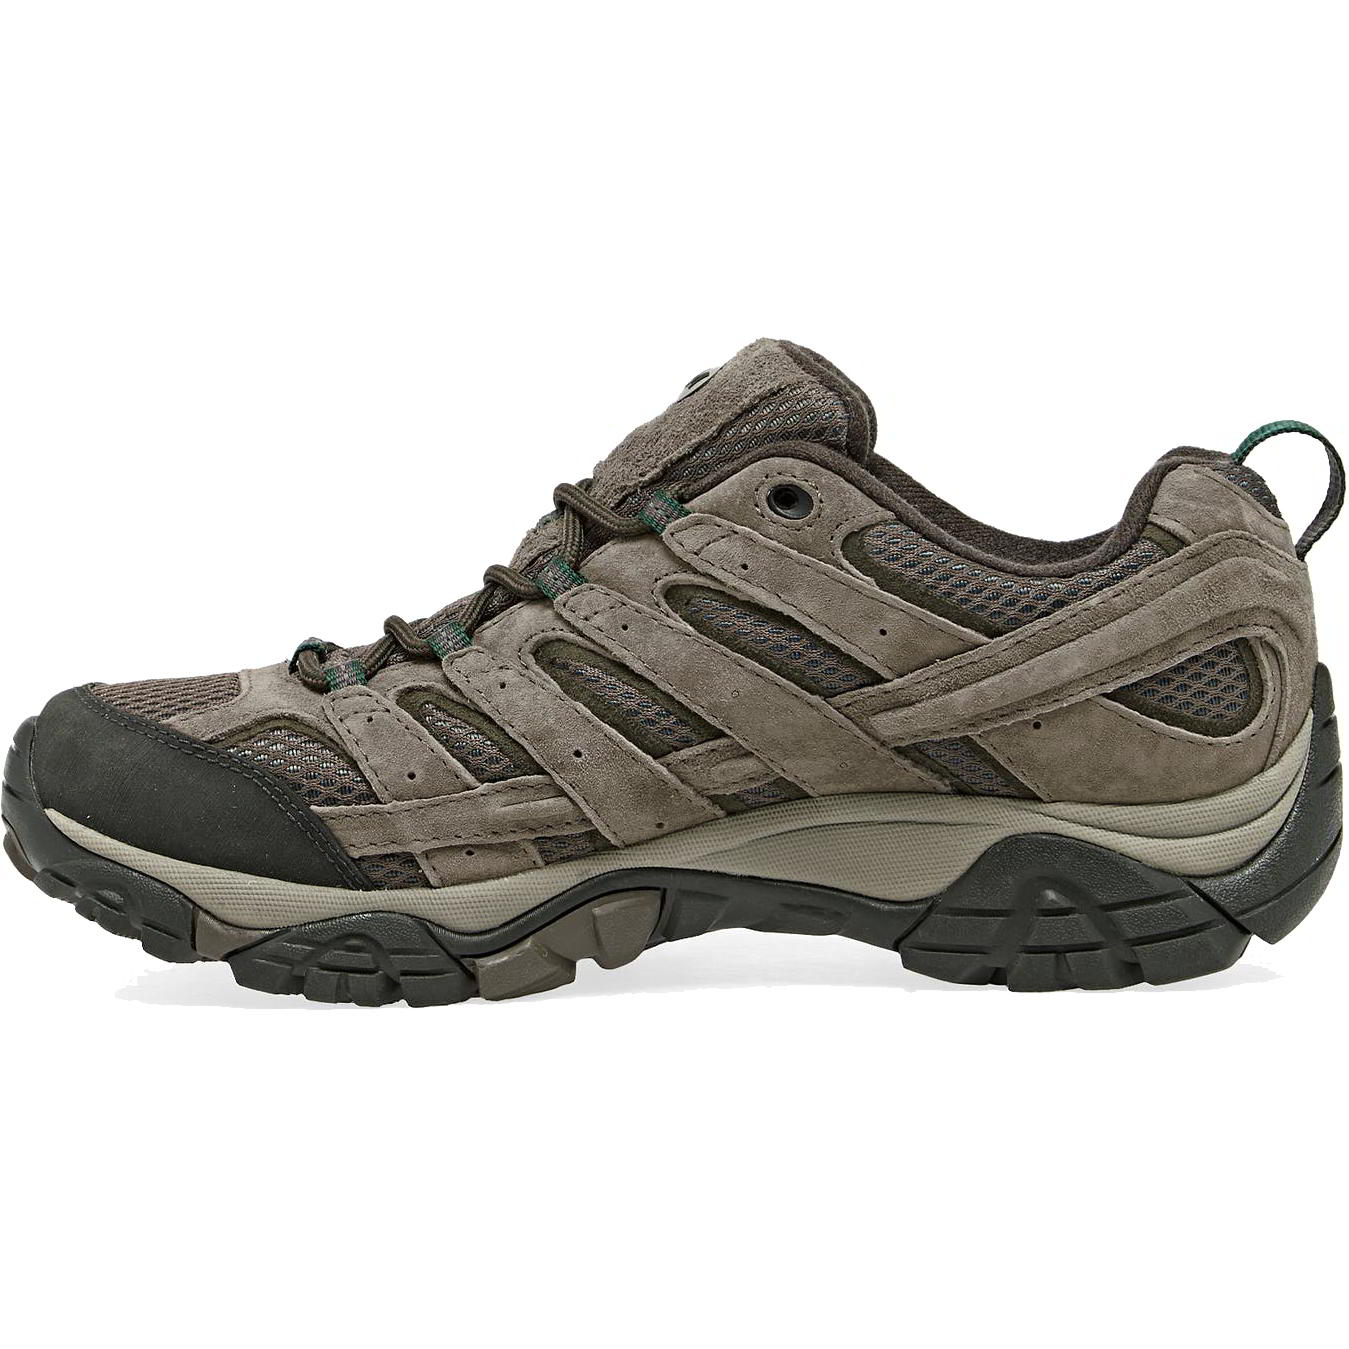 Merrell Mens Moab 2 LTR GTX Waterproof Walking Shoes - Boulder 2951